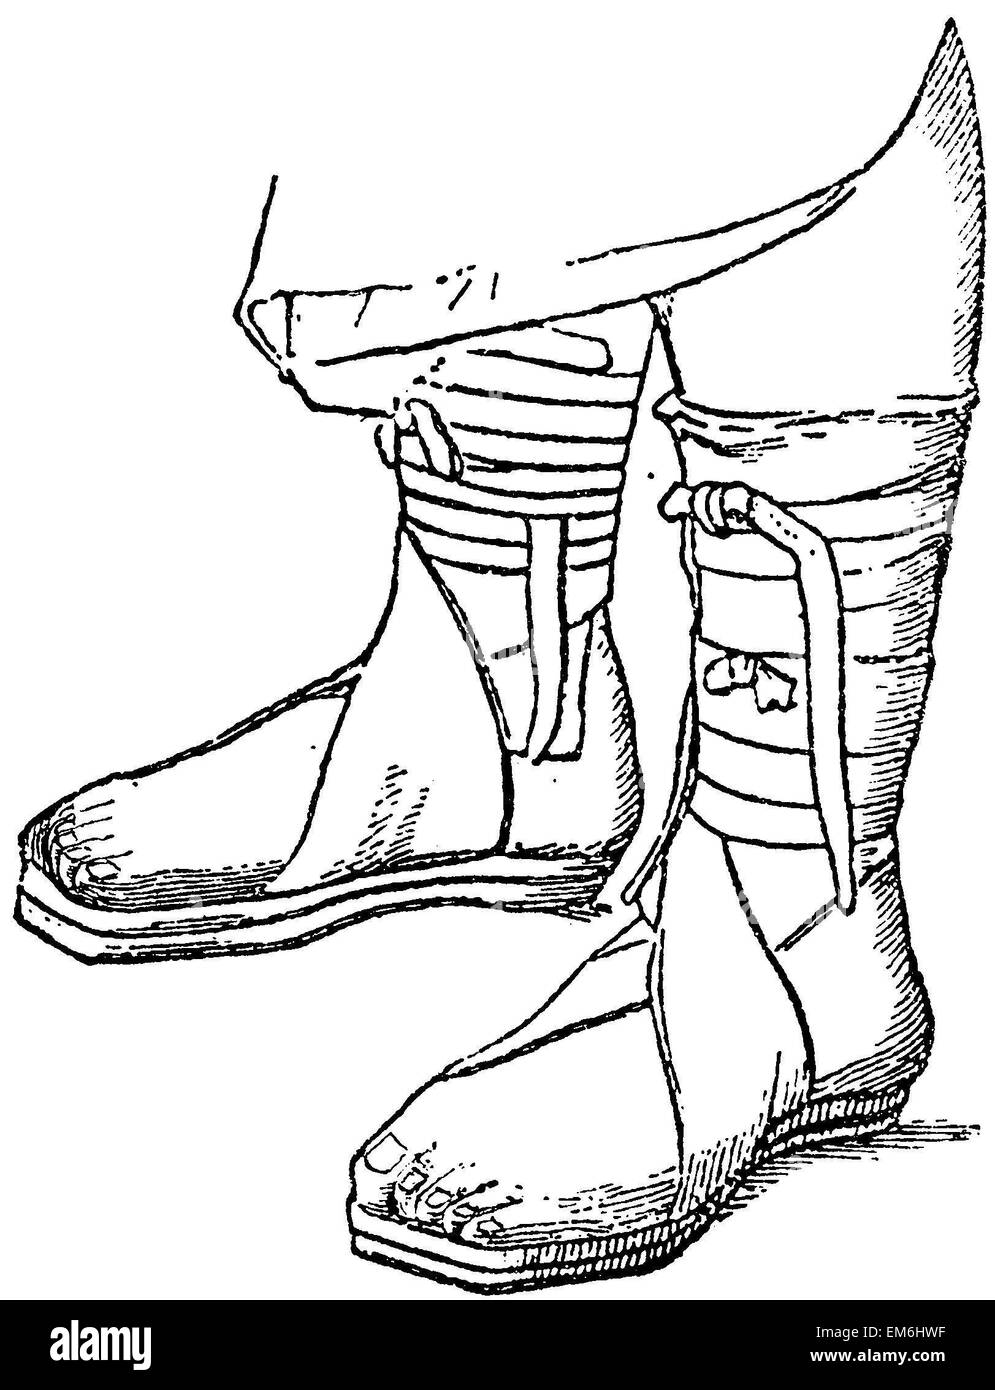 romano calzature